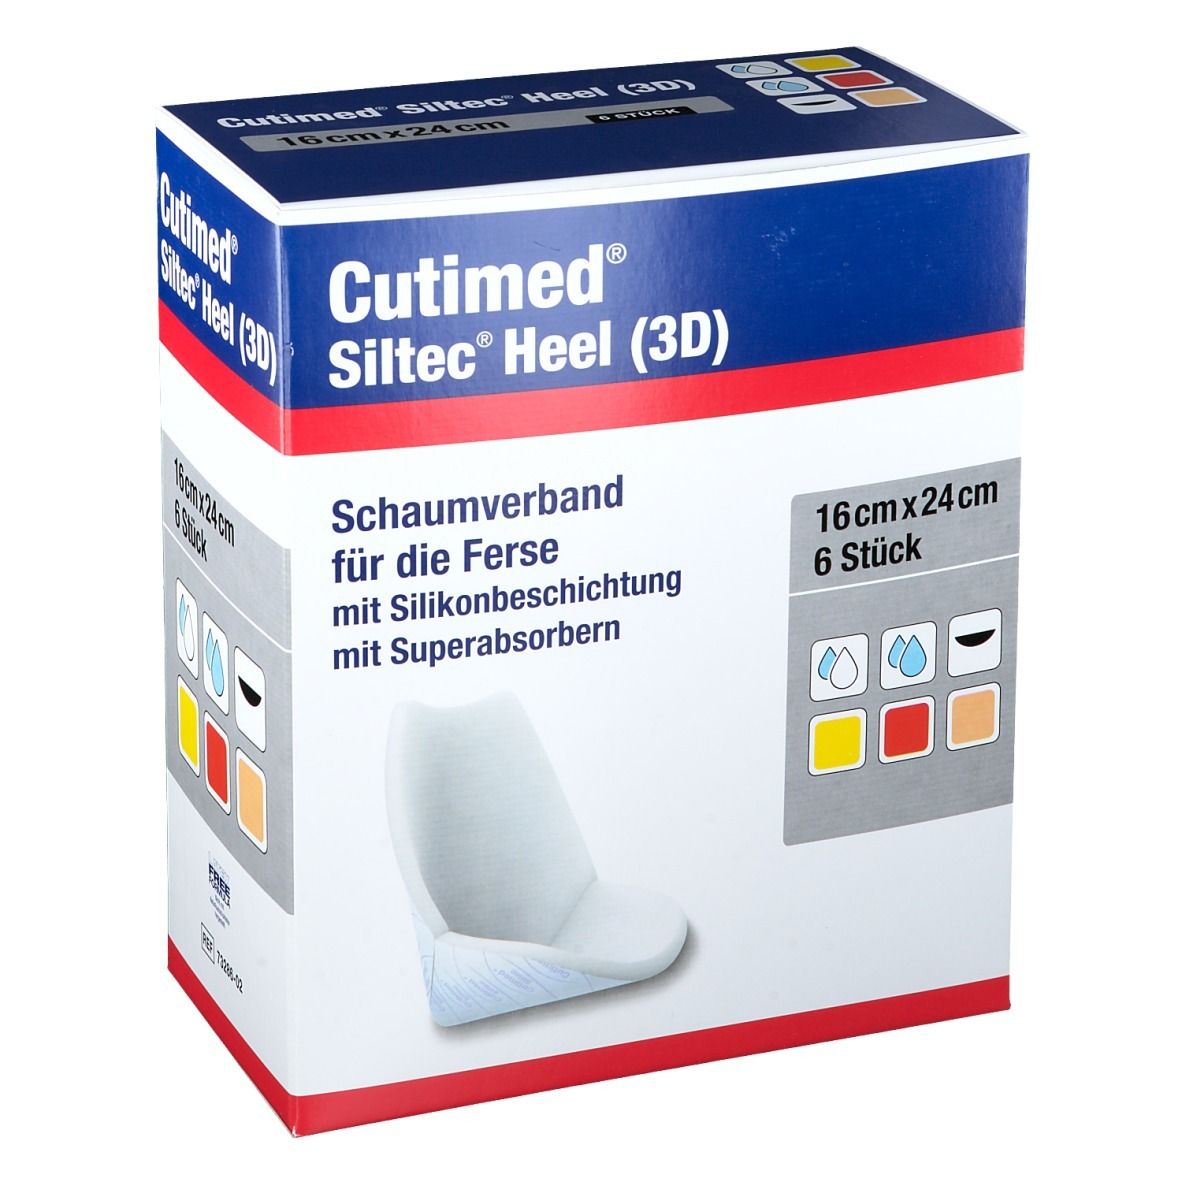 Cutimed® Siltec® Heel 3D 16 cm x 24 cm